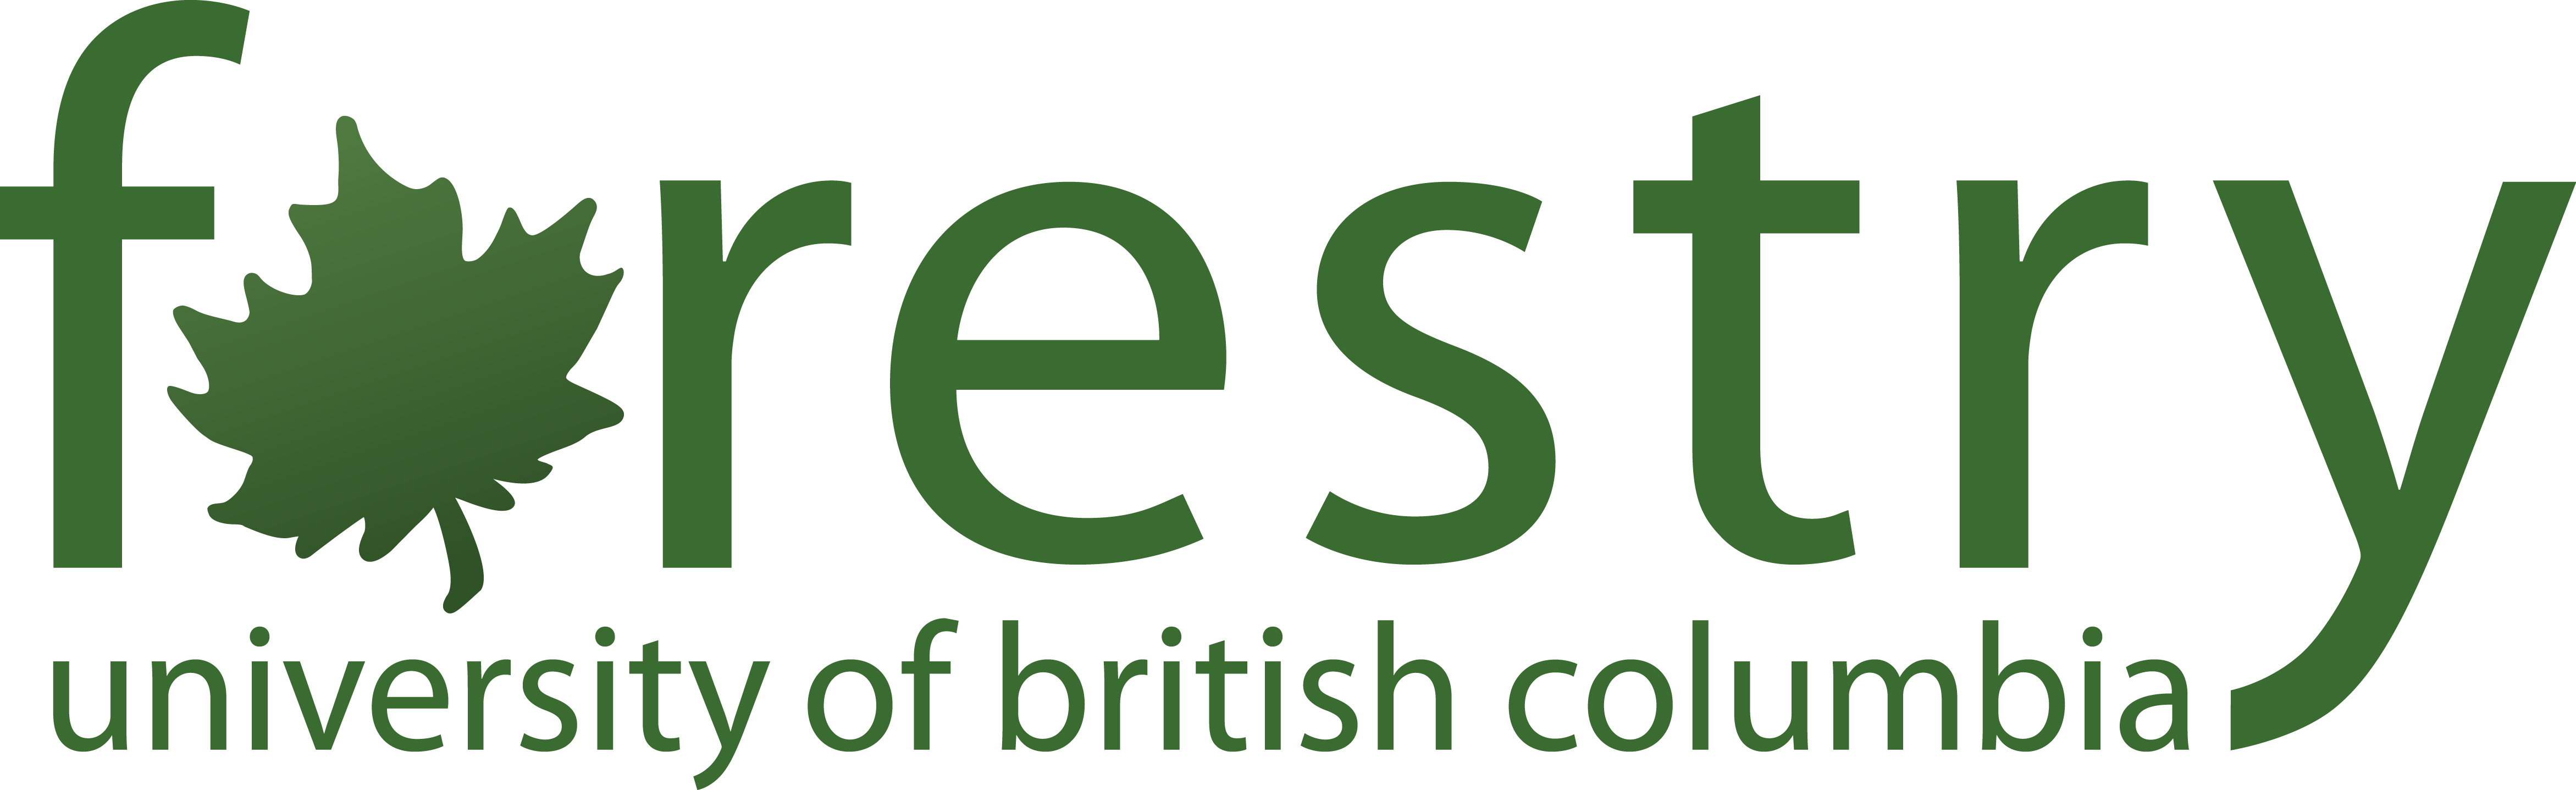 University of British Columbia Forestry Logo